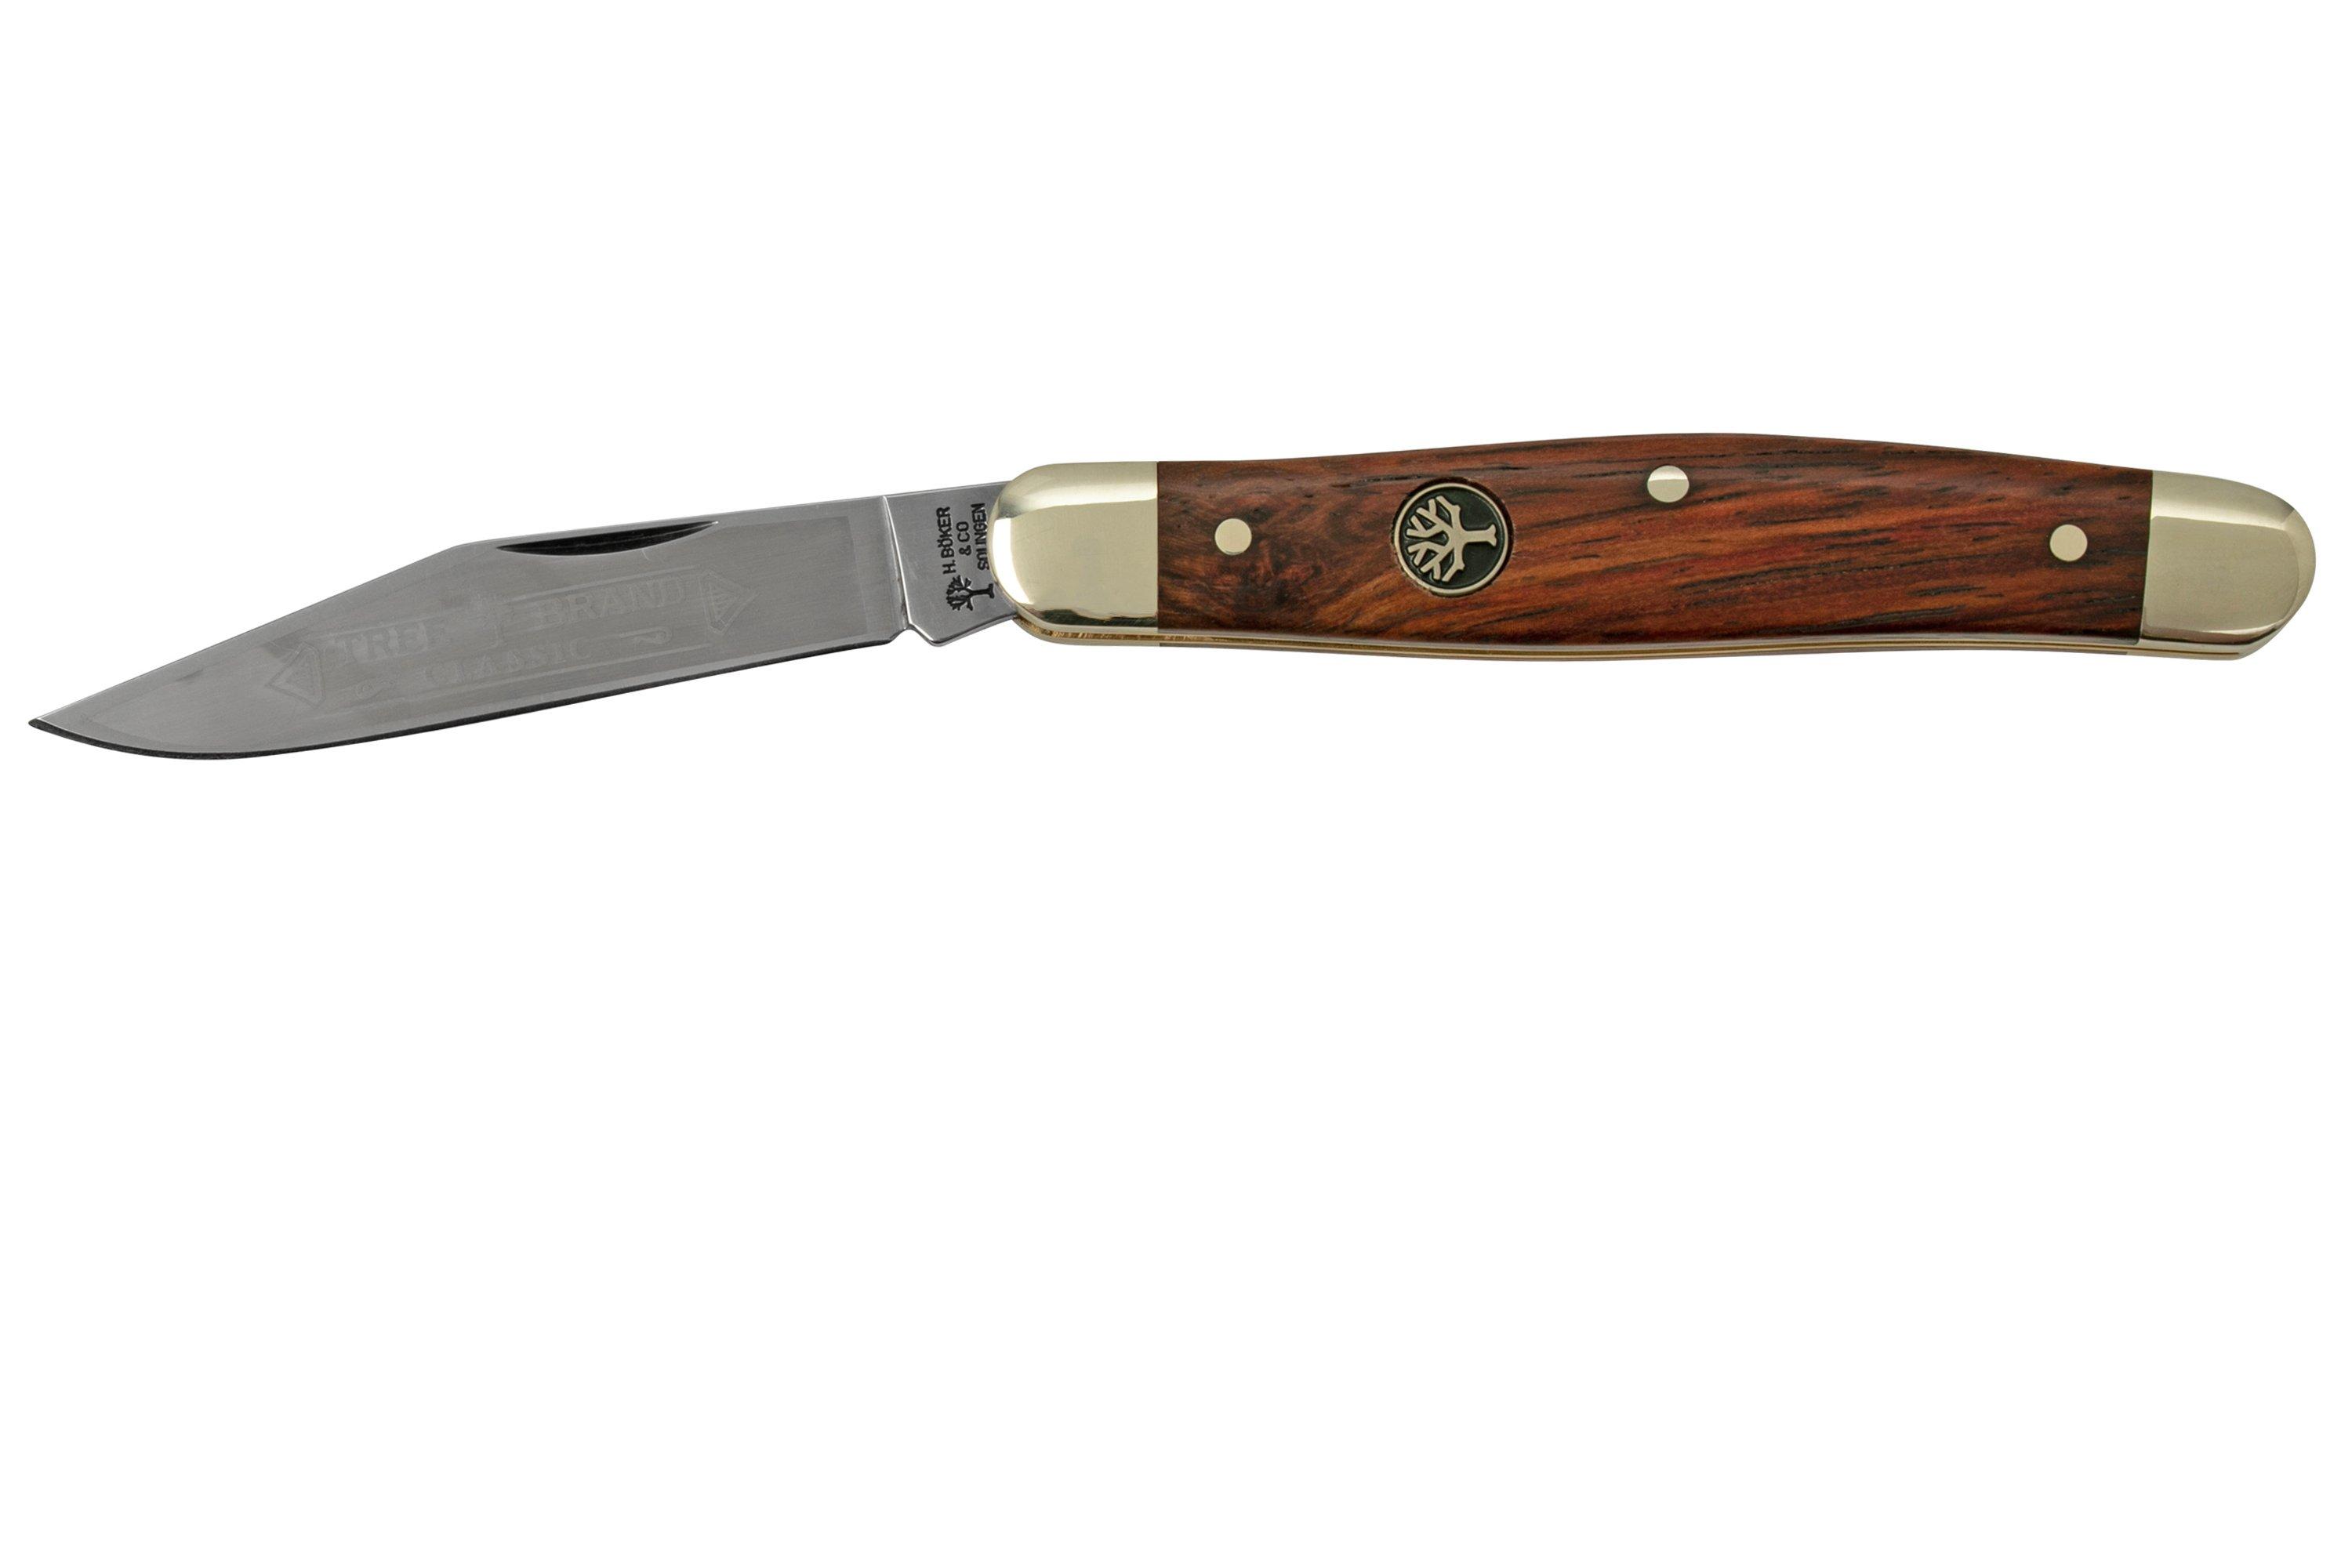 Böker Stockman Rosewood 117162 pocket knife  Advantageously shopping at